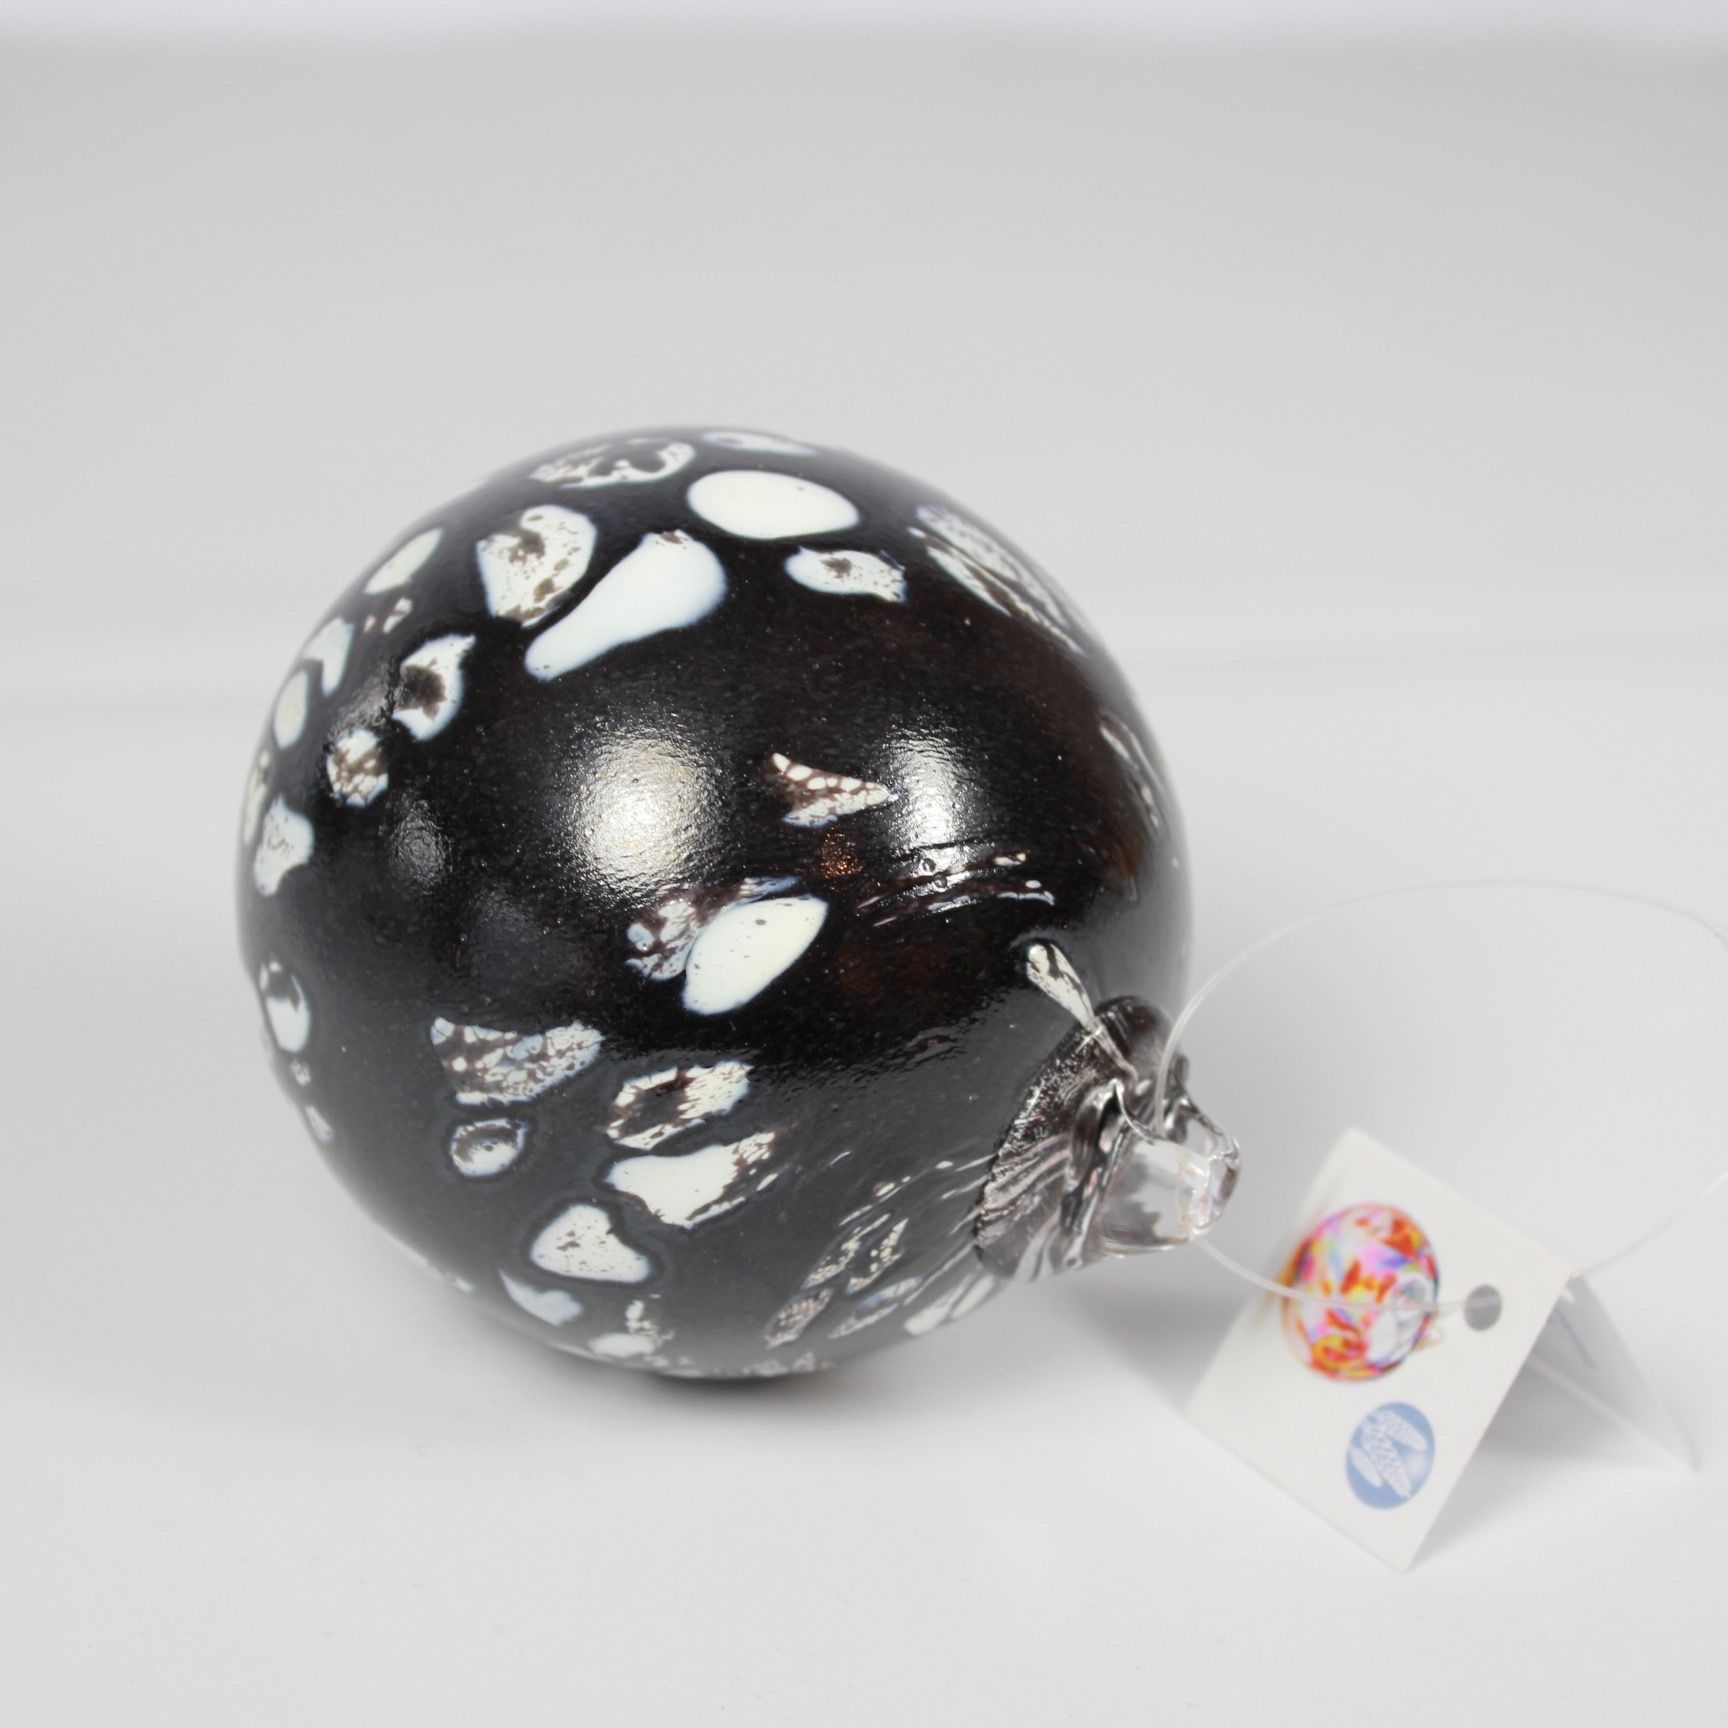 Black/White Speckled Friendship Ball